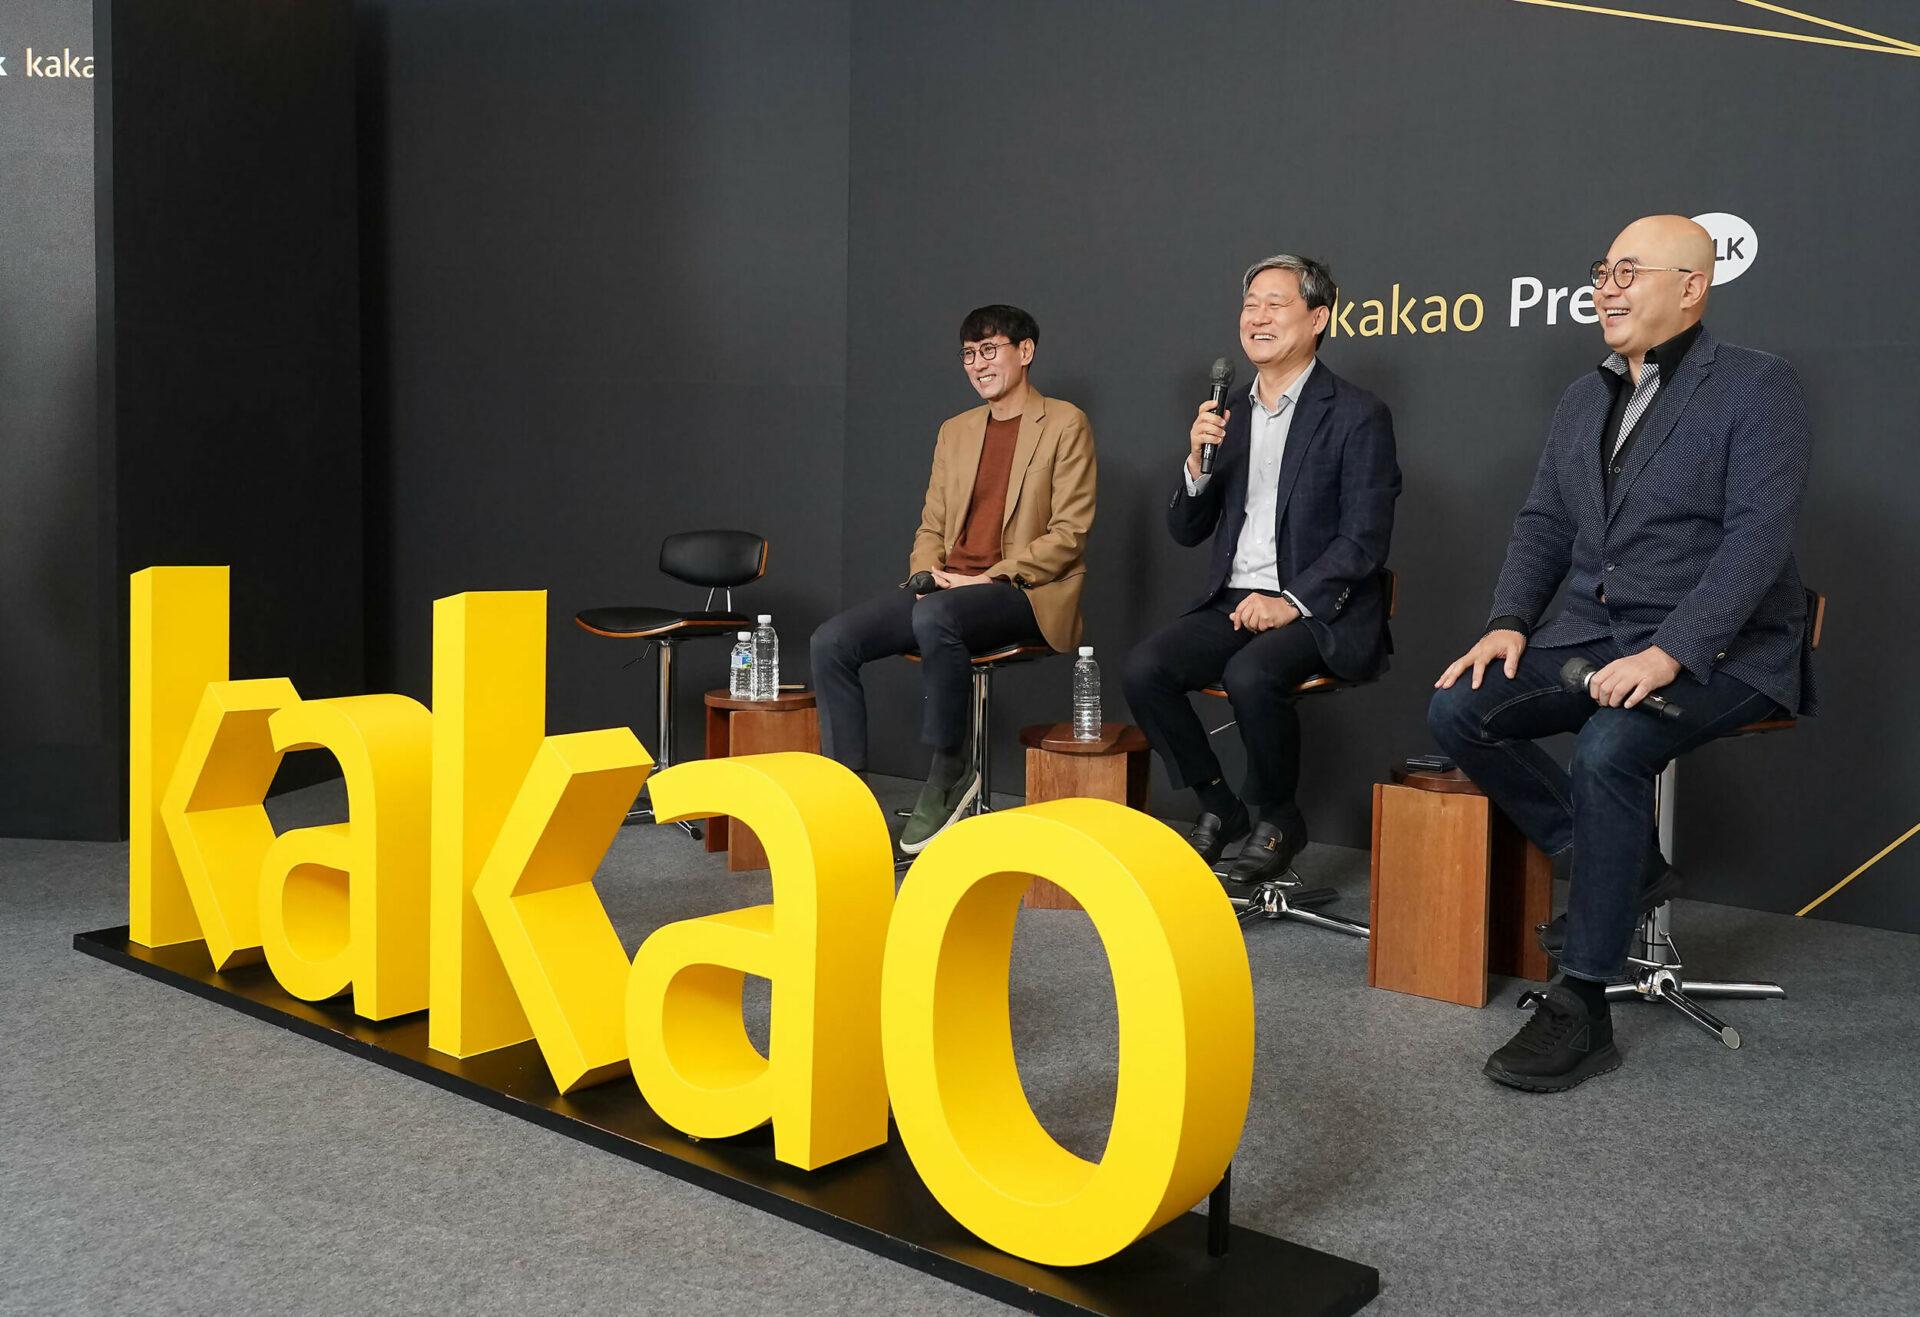 Kakao press conference